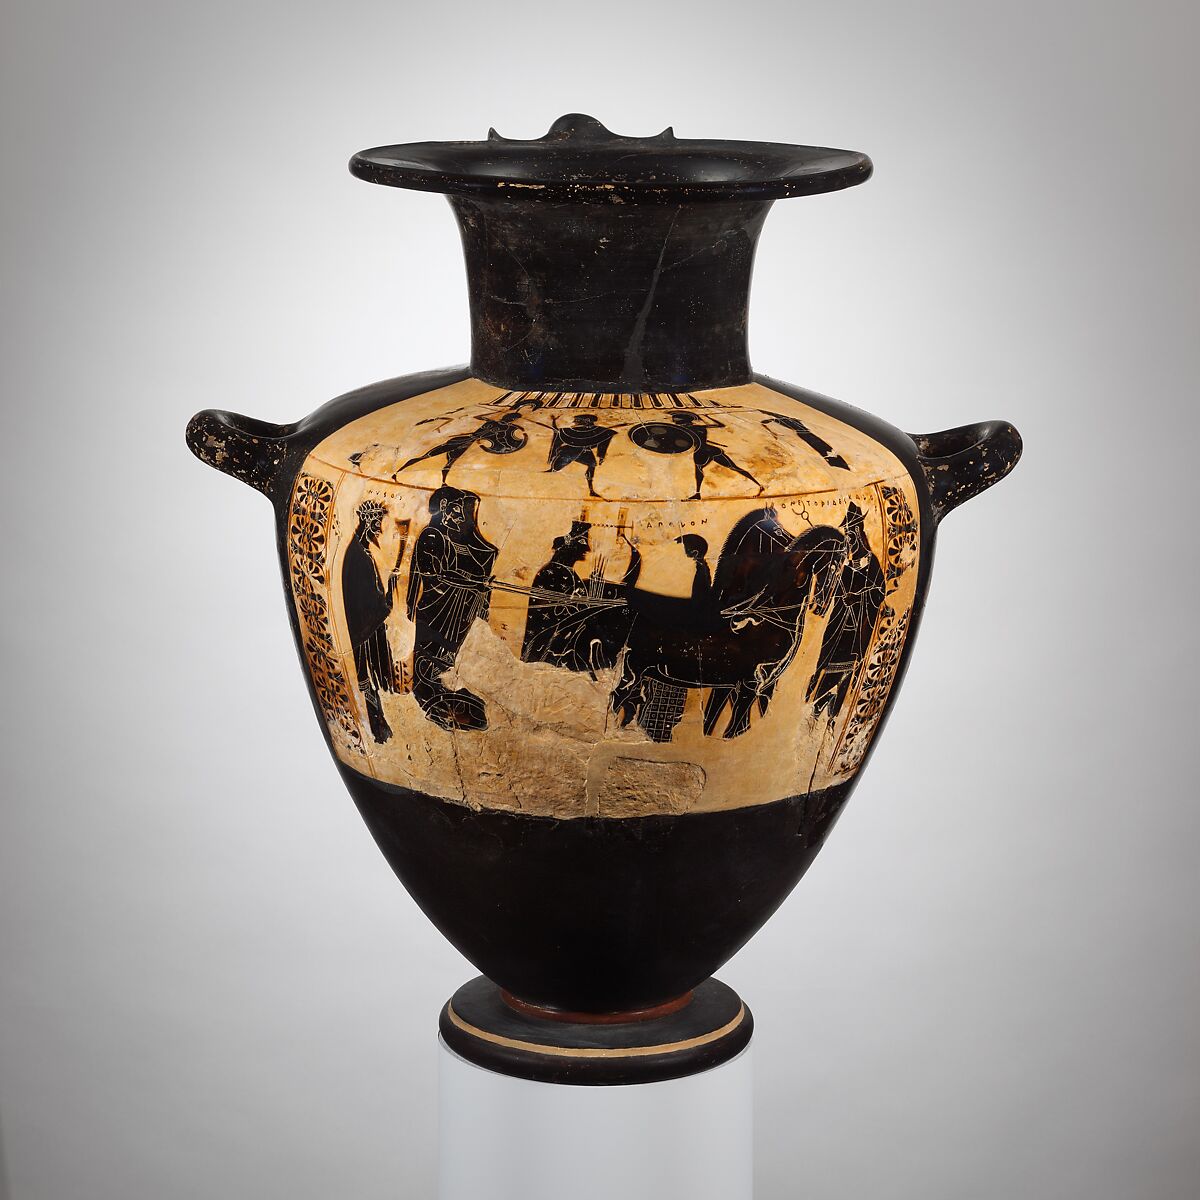 Terracotta hydria (water jar), Attributed to the Mastos Painter, Terracotta, Greek, Attic 